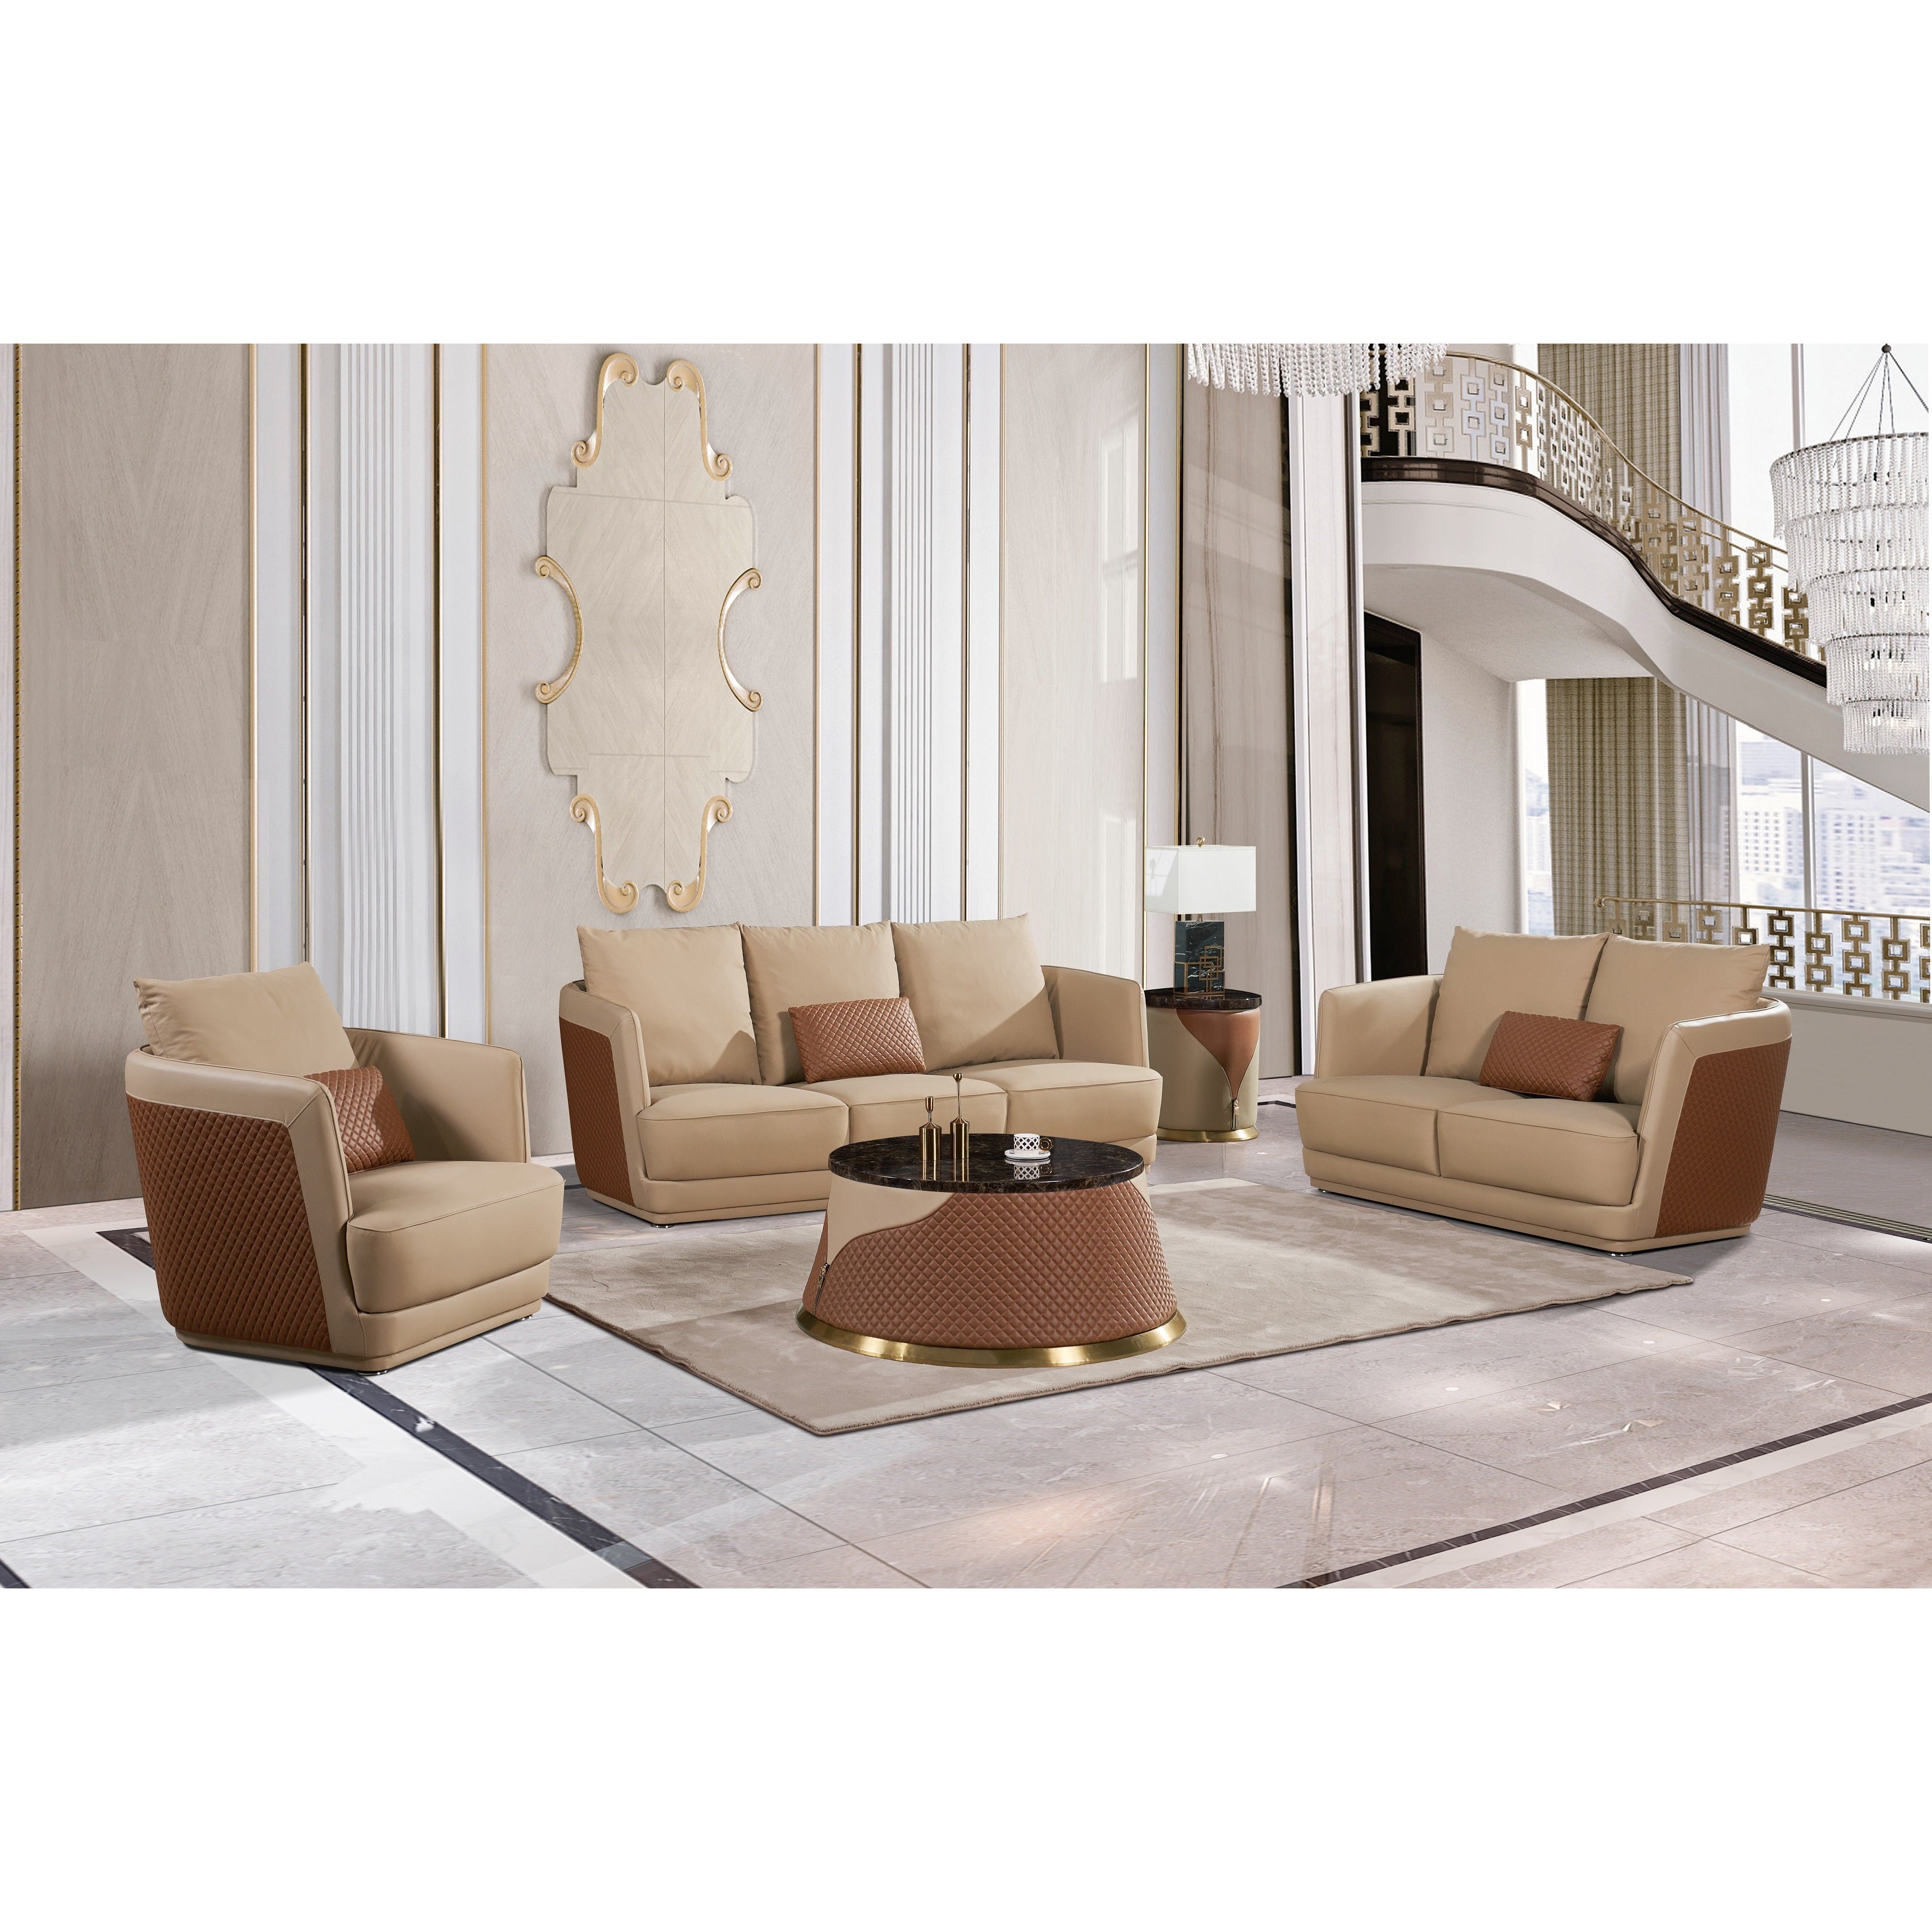 European Furniture - Glamour Mansion Sofa Tan & Brown Italian Leather - EF-51617-4S - New Star Living